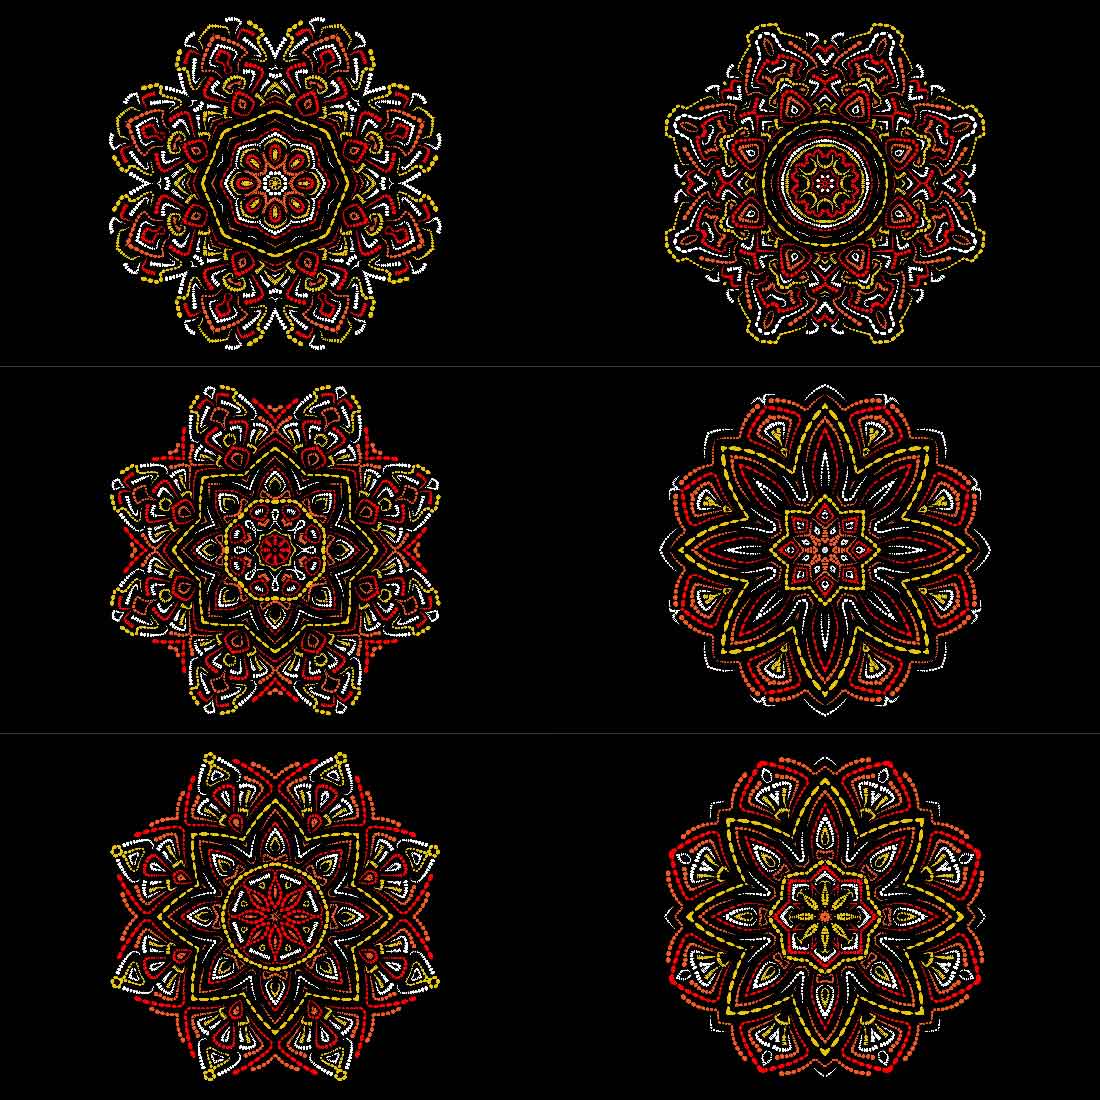 Collection of amazing images of geometric mandalas